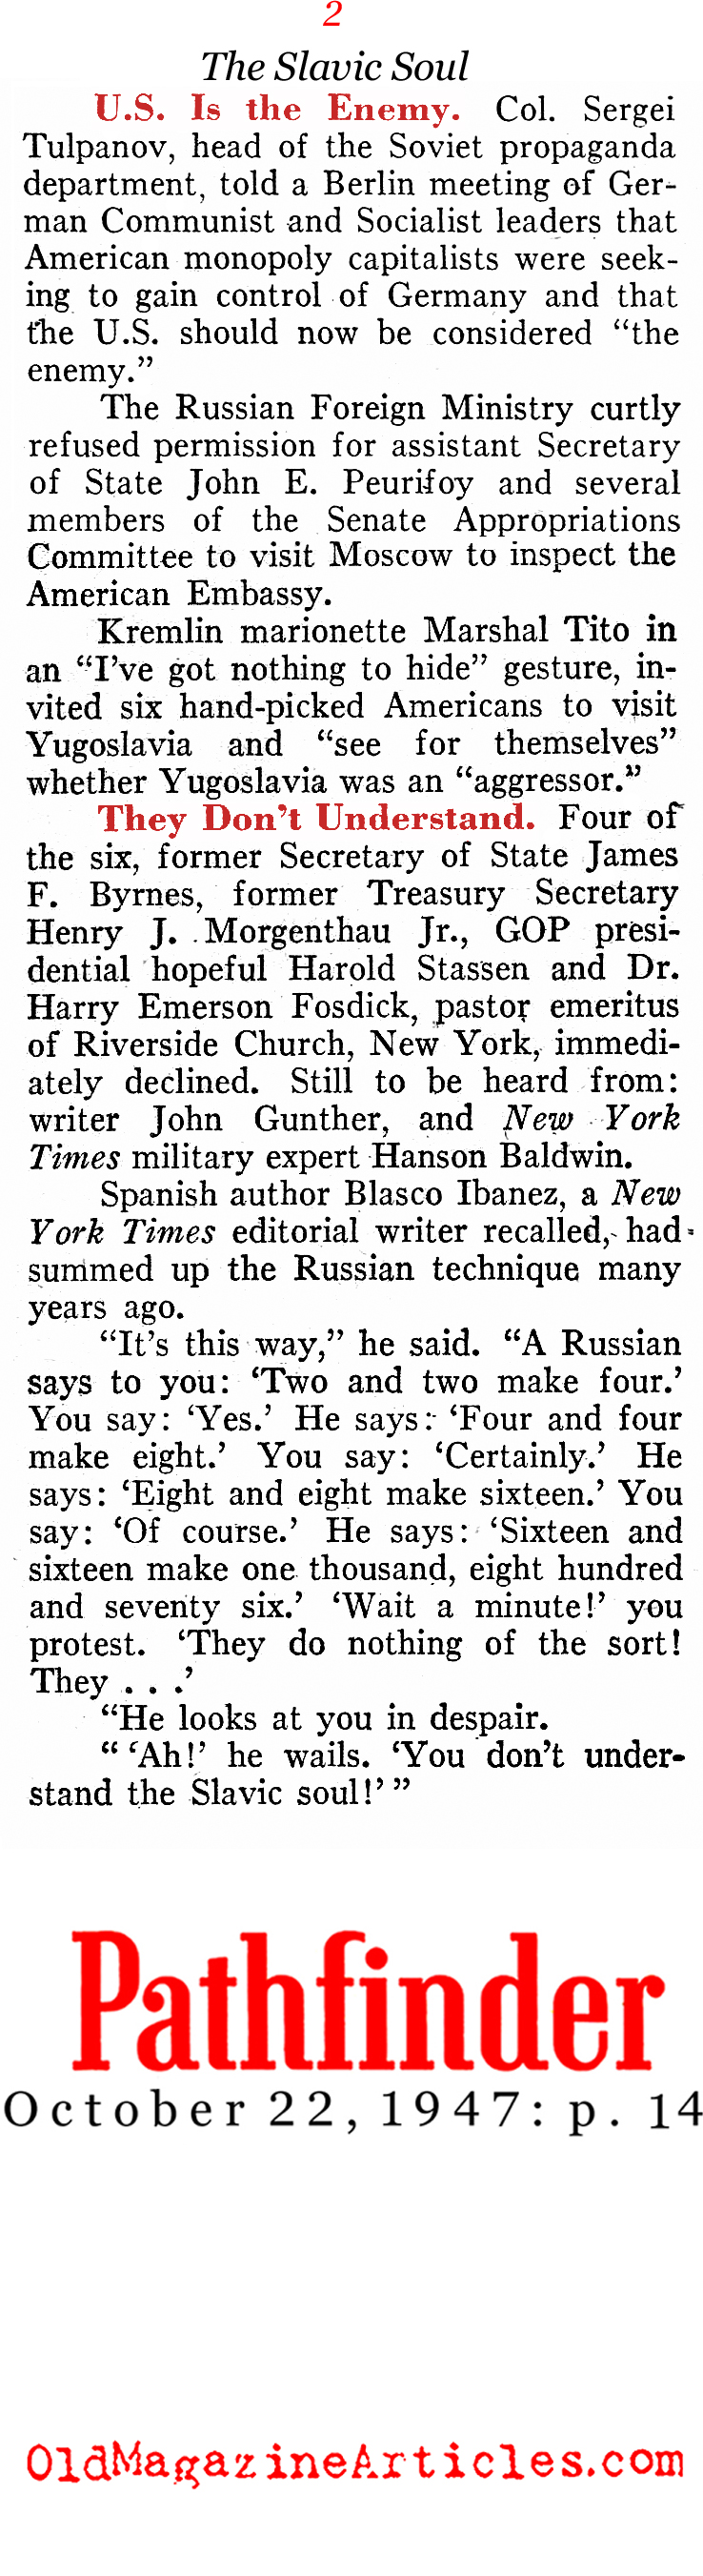 The Soviet Reaction to the Marshall Plan (Pathfinder Magazine, 1947)